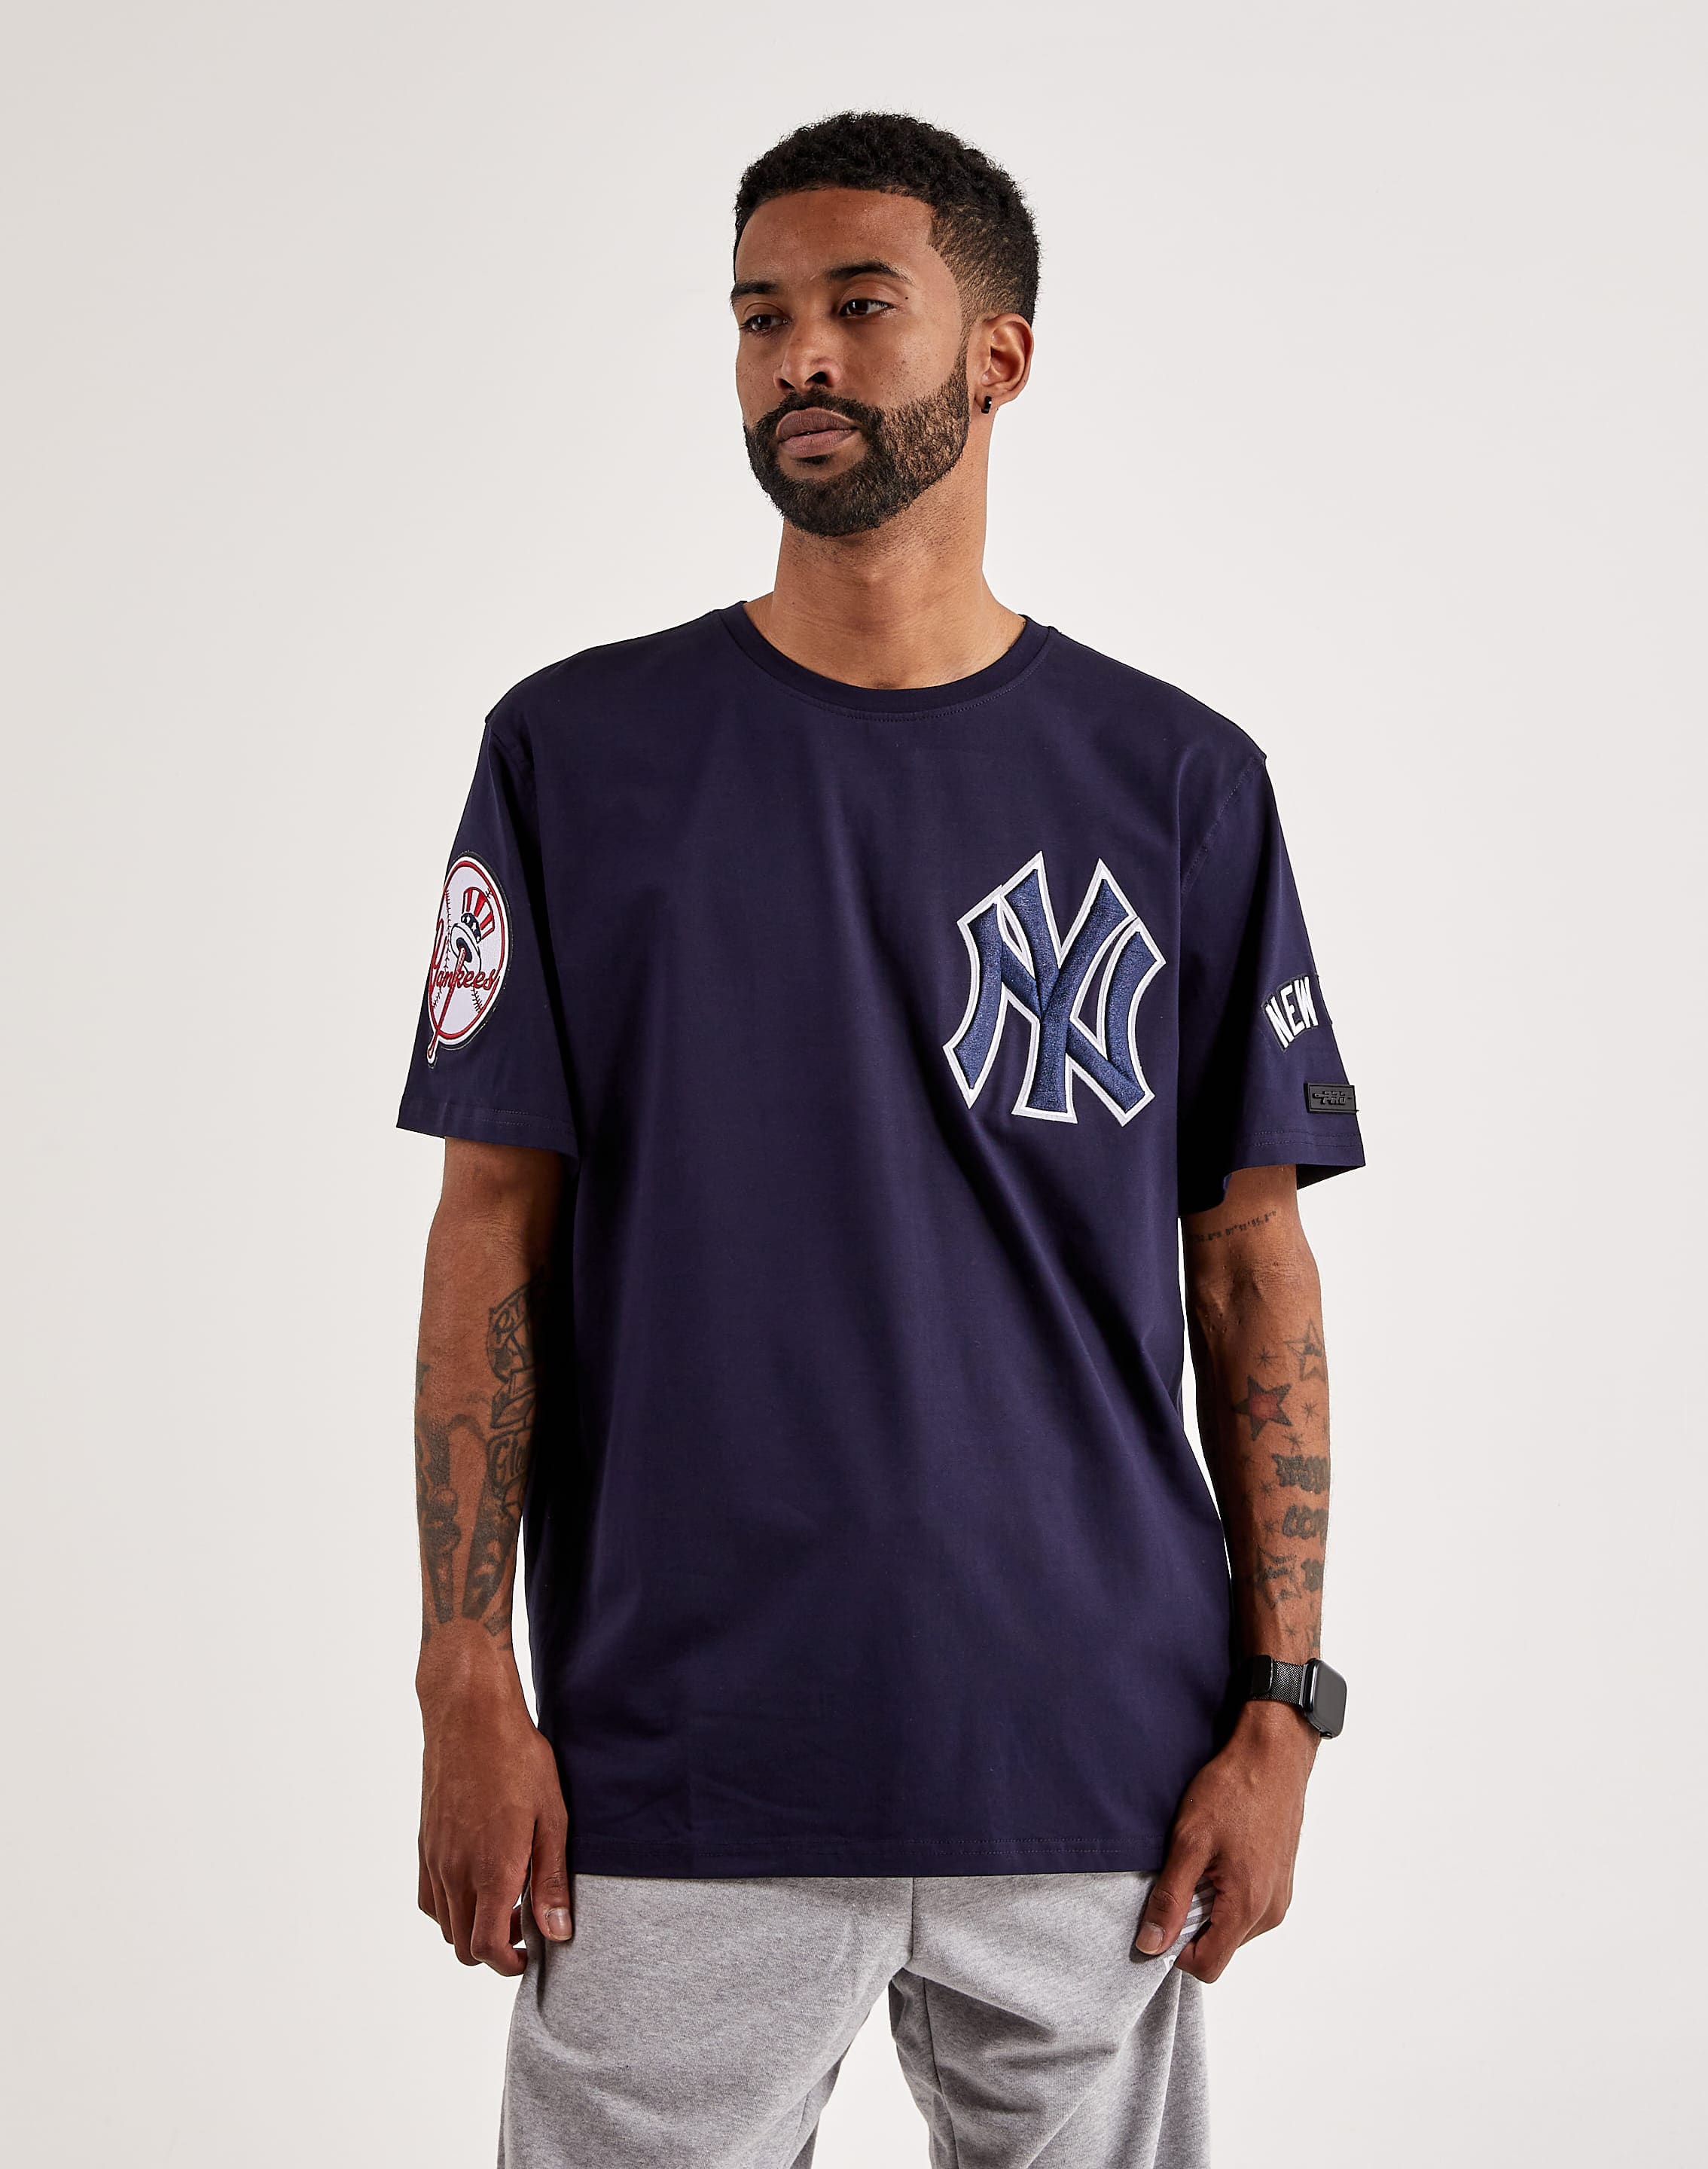 New York Yankees T-Shirts, Yankees Tees, New York Yankees Shirts